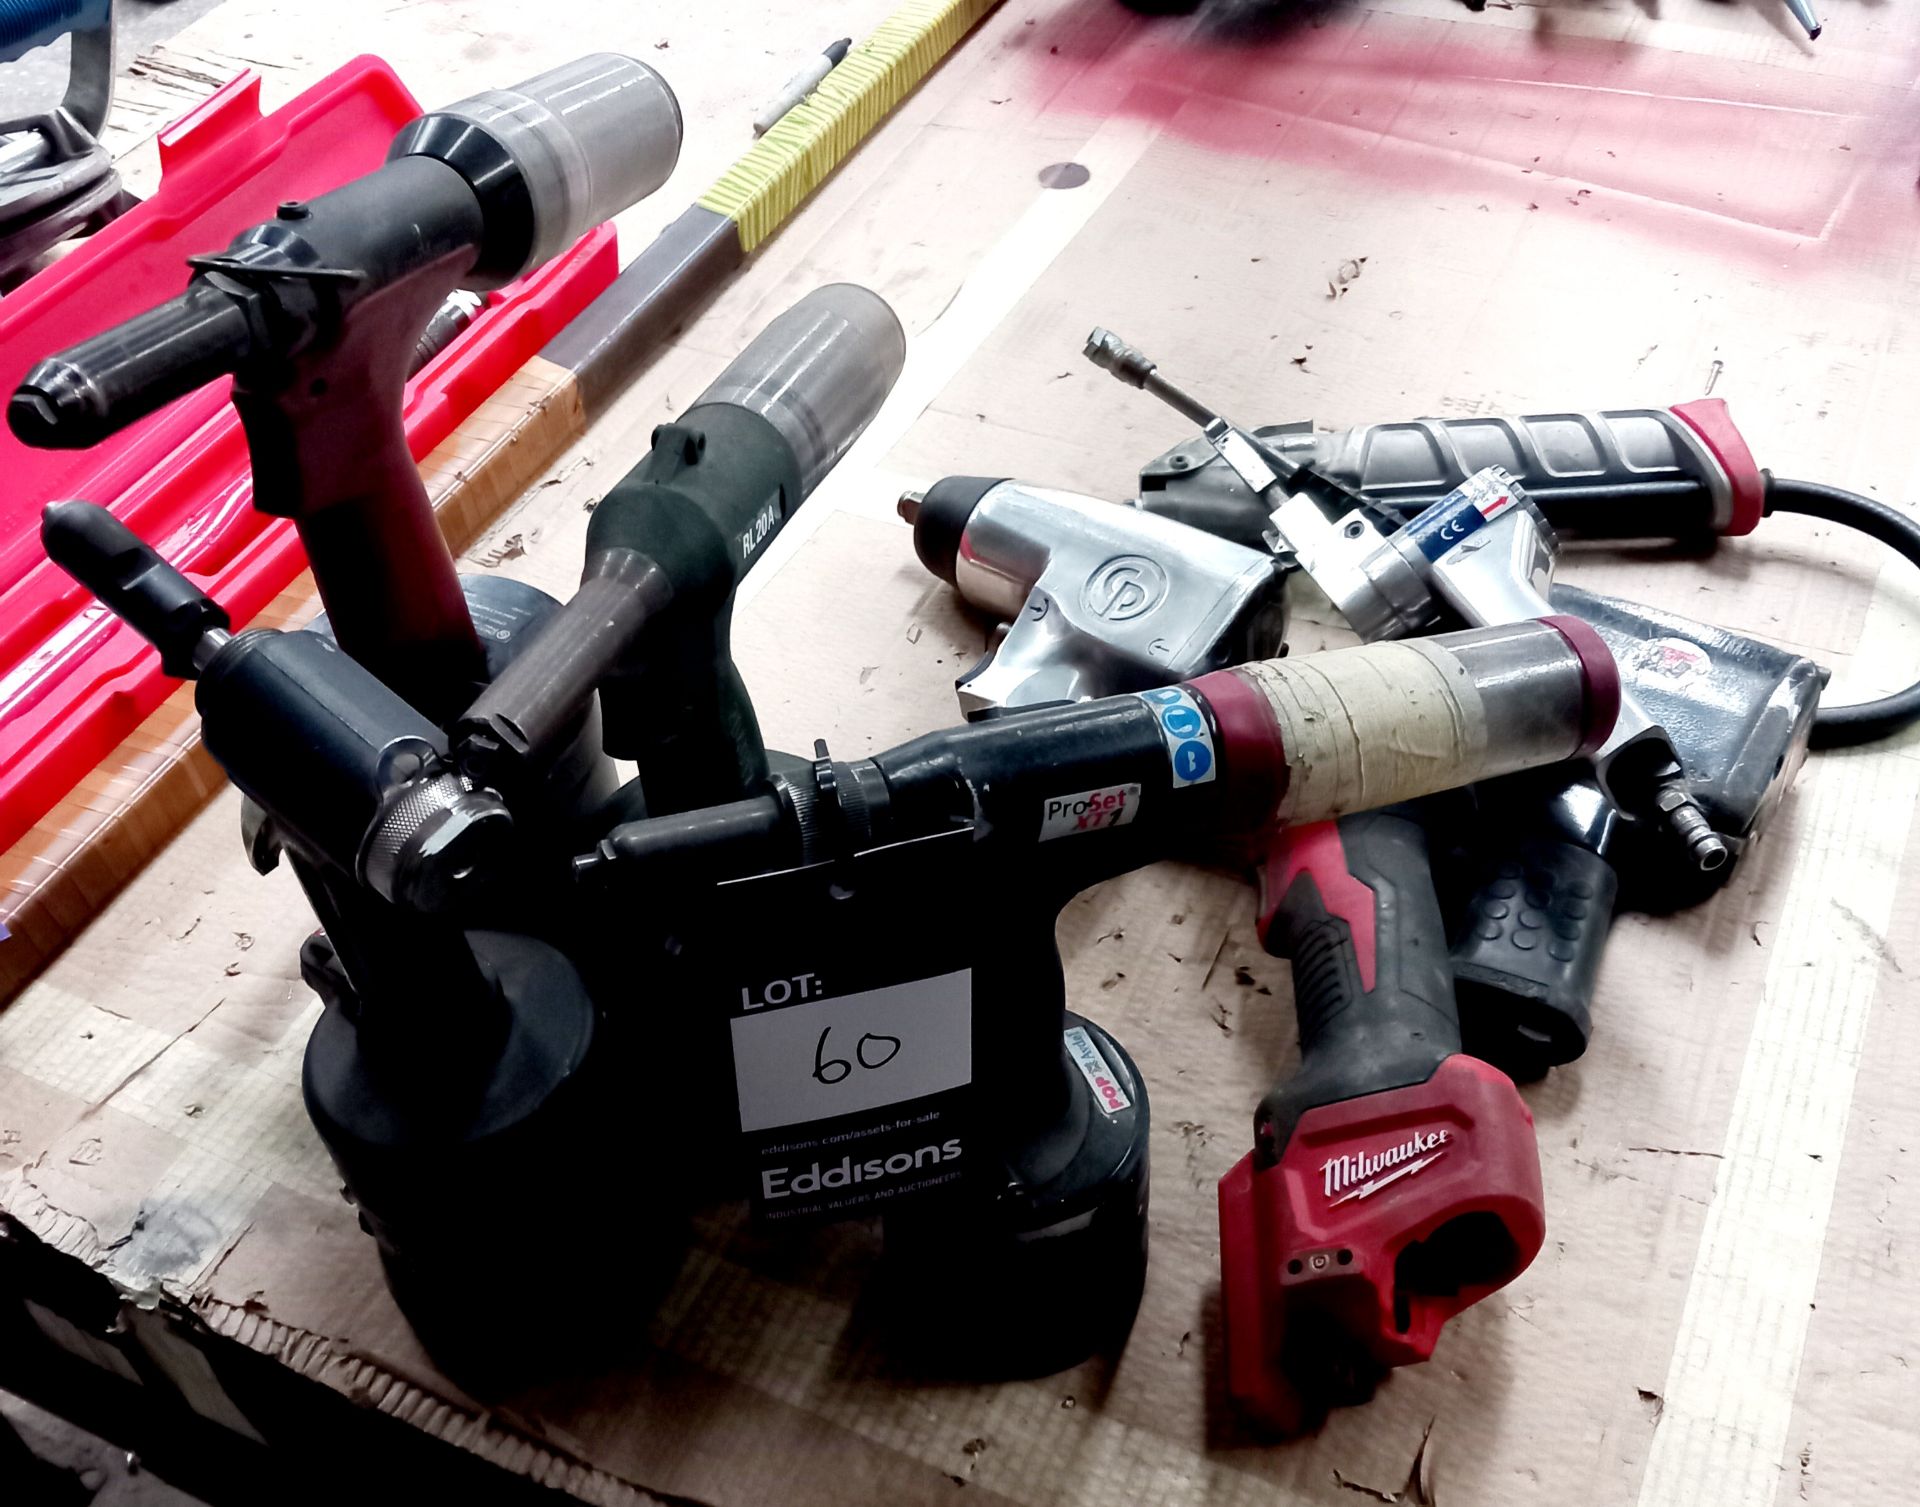 Quantity of pneumatic rivet guns and various pneumatic tools